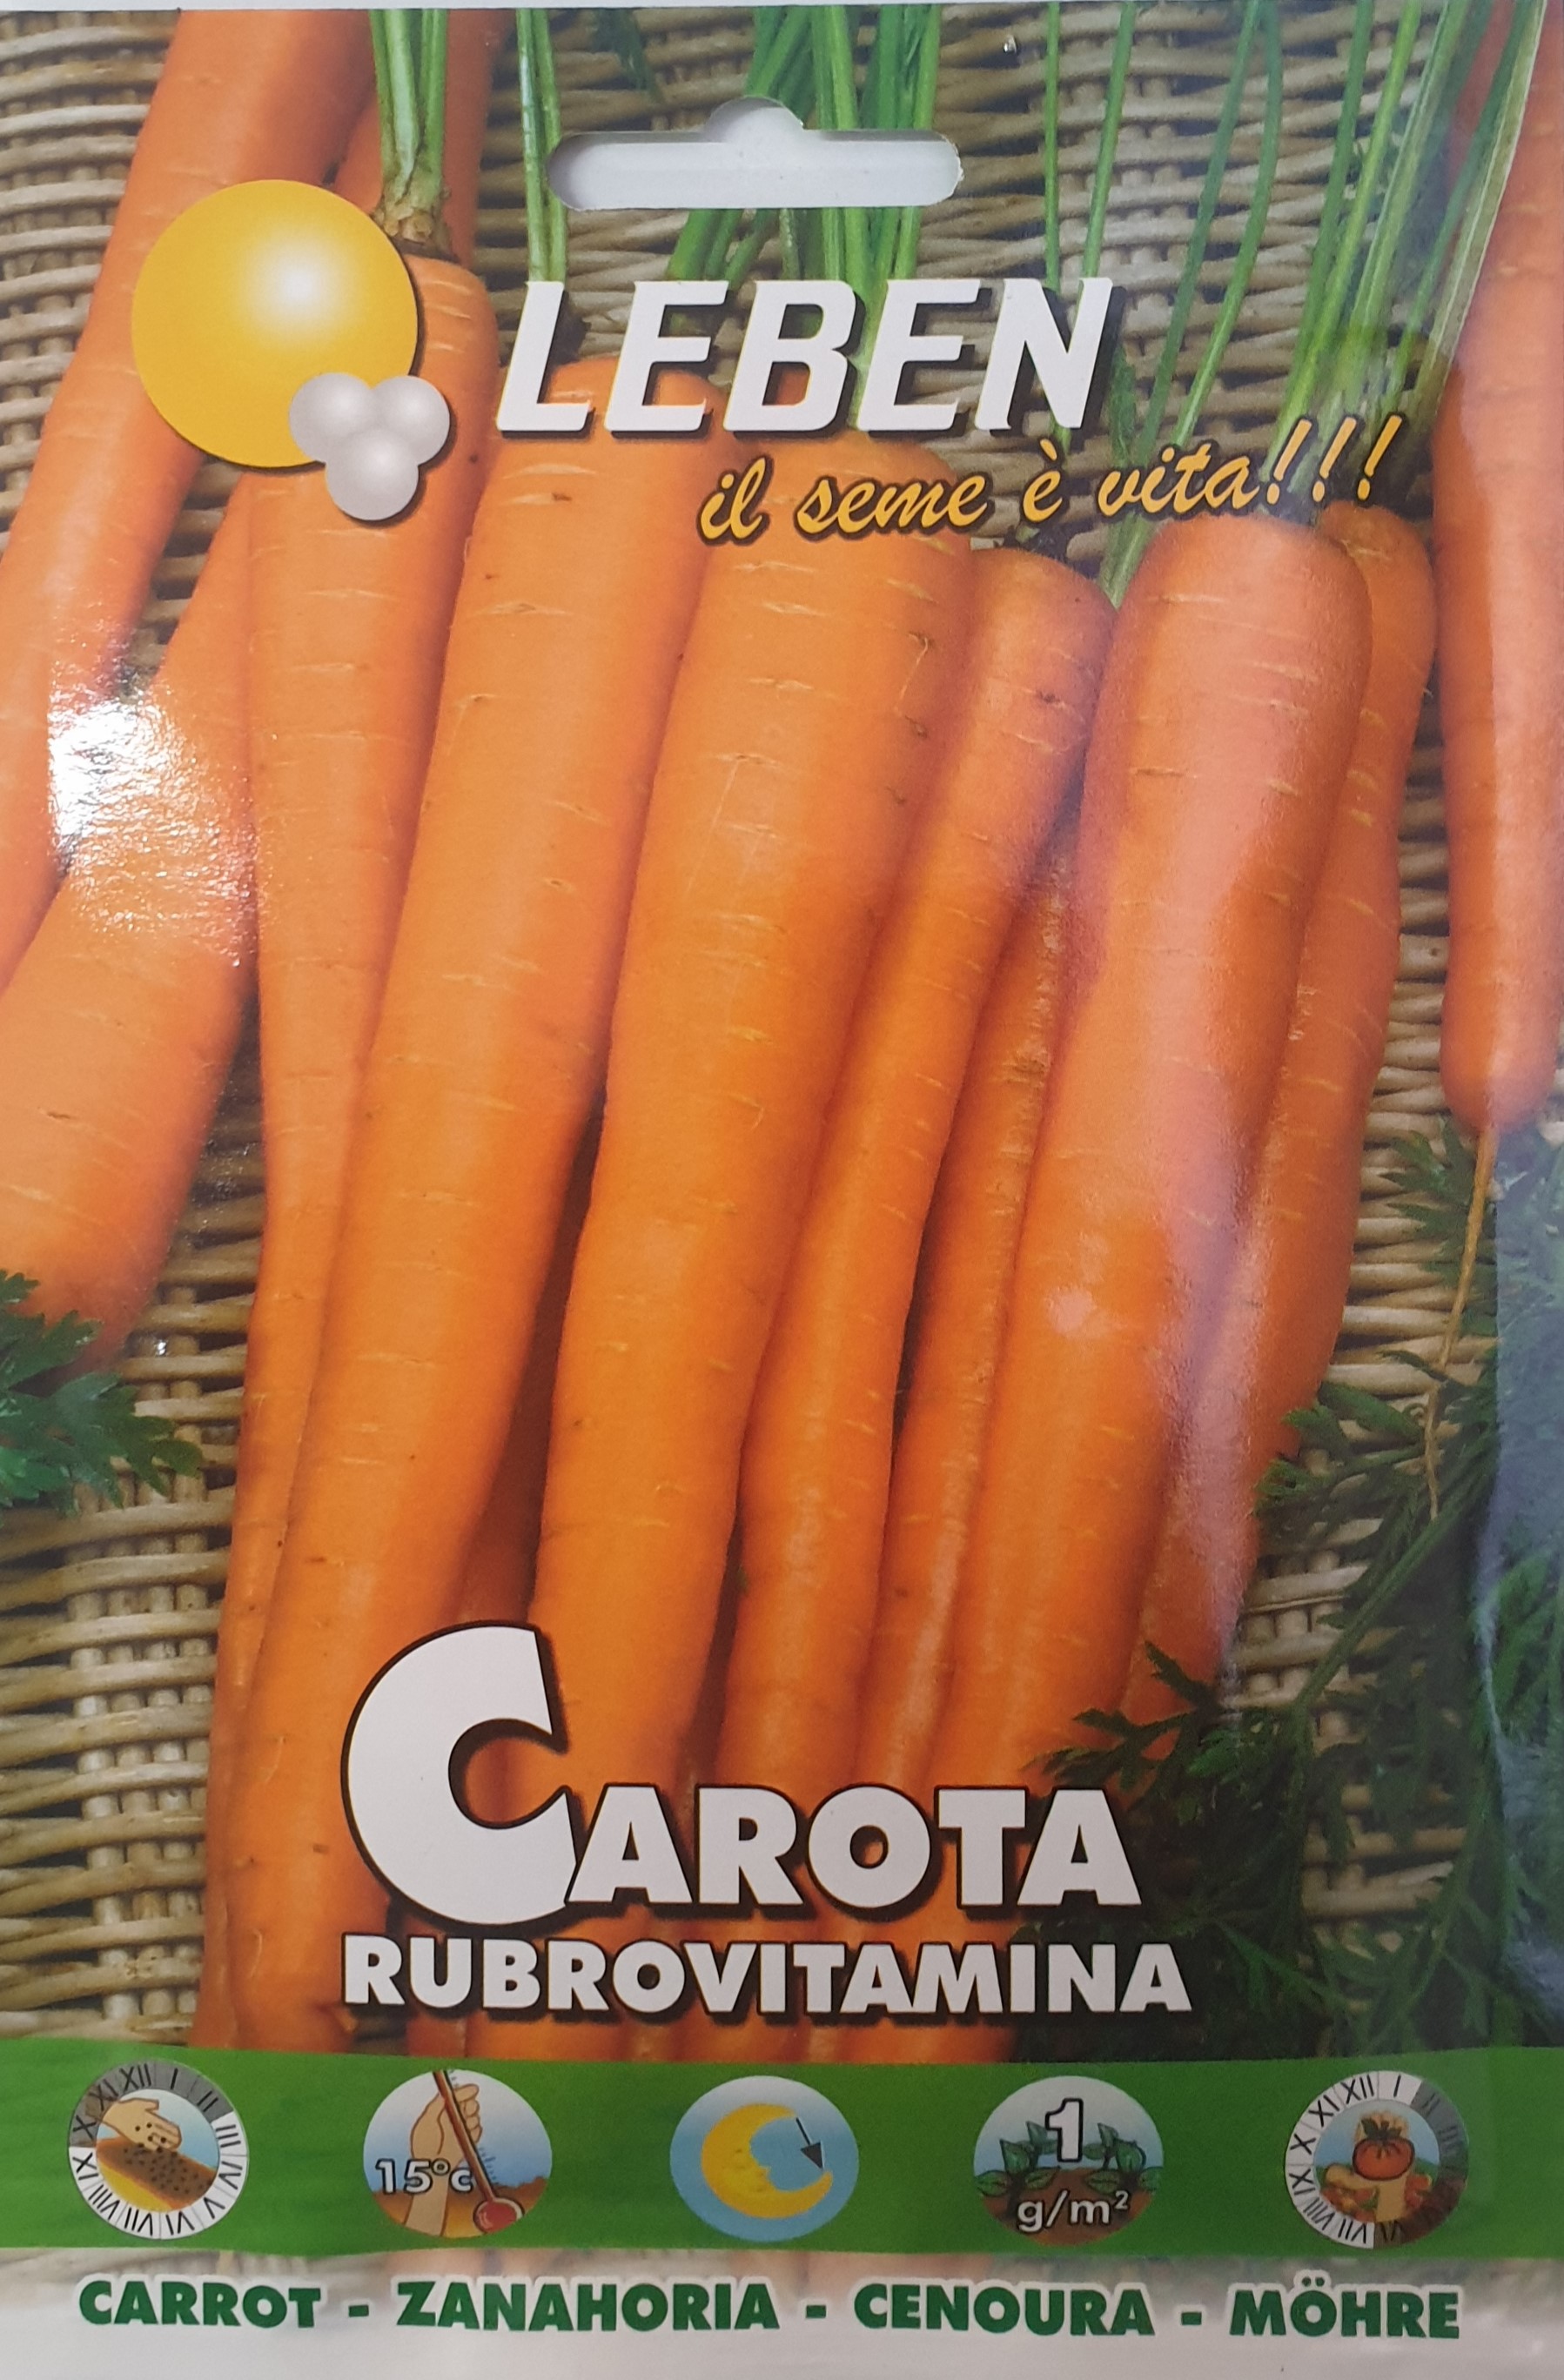 Carrot Rubrovitamina Leben *Save £1*